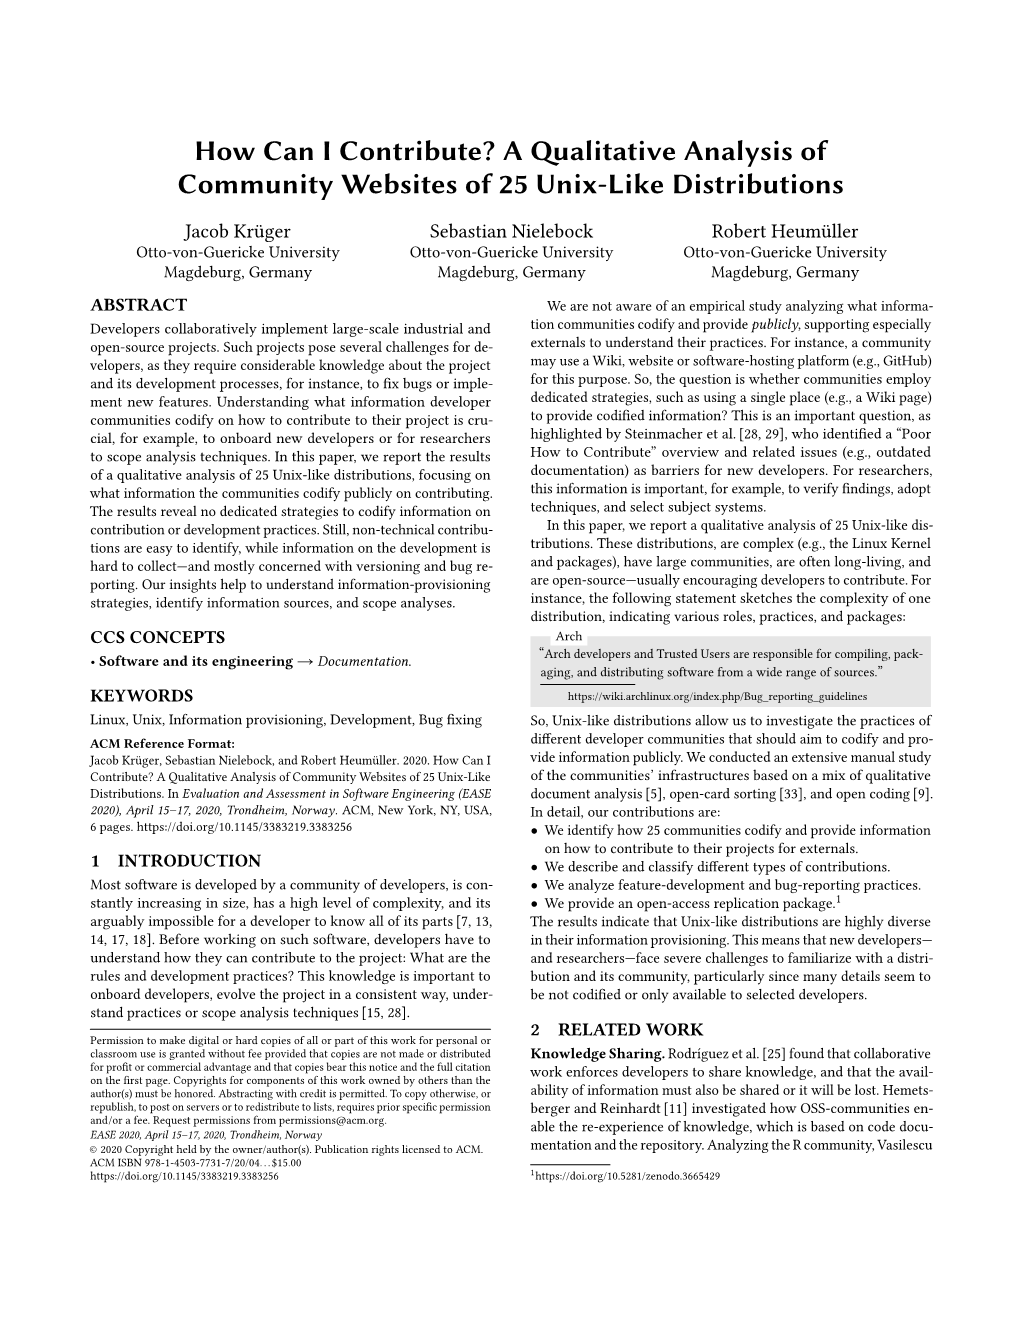 A Qualitative Analysis of Community Websites of 25 Unix-Like Distributions